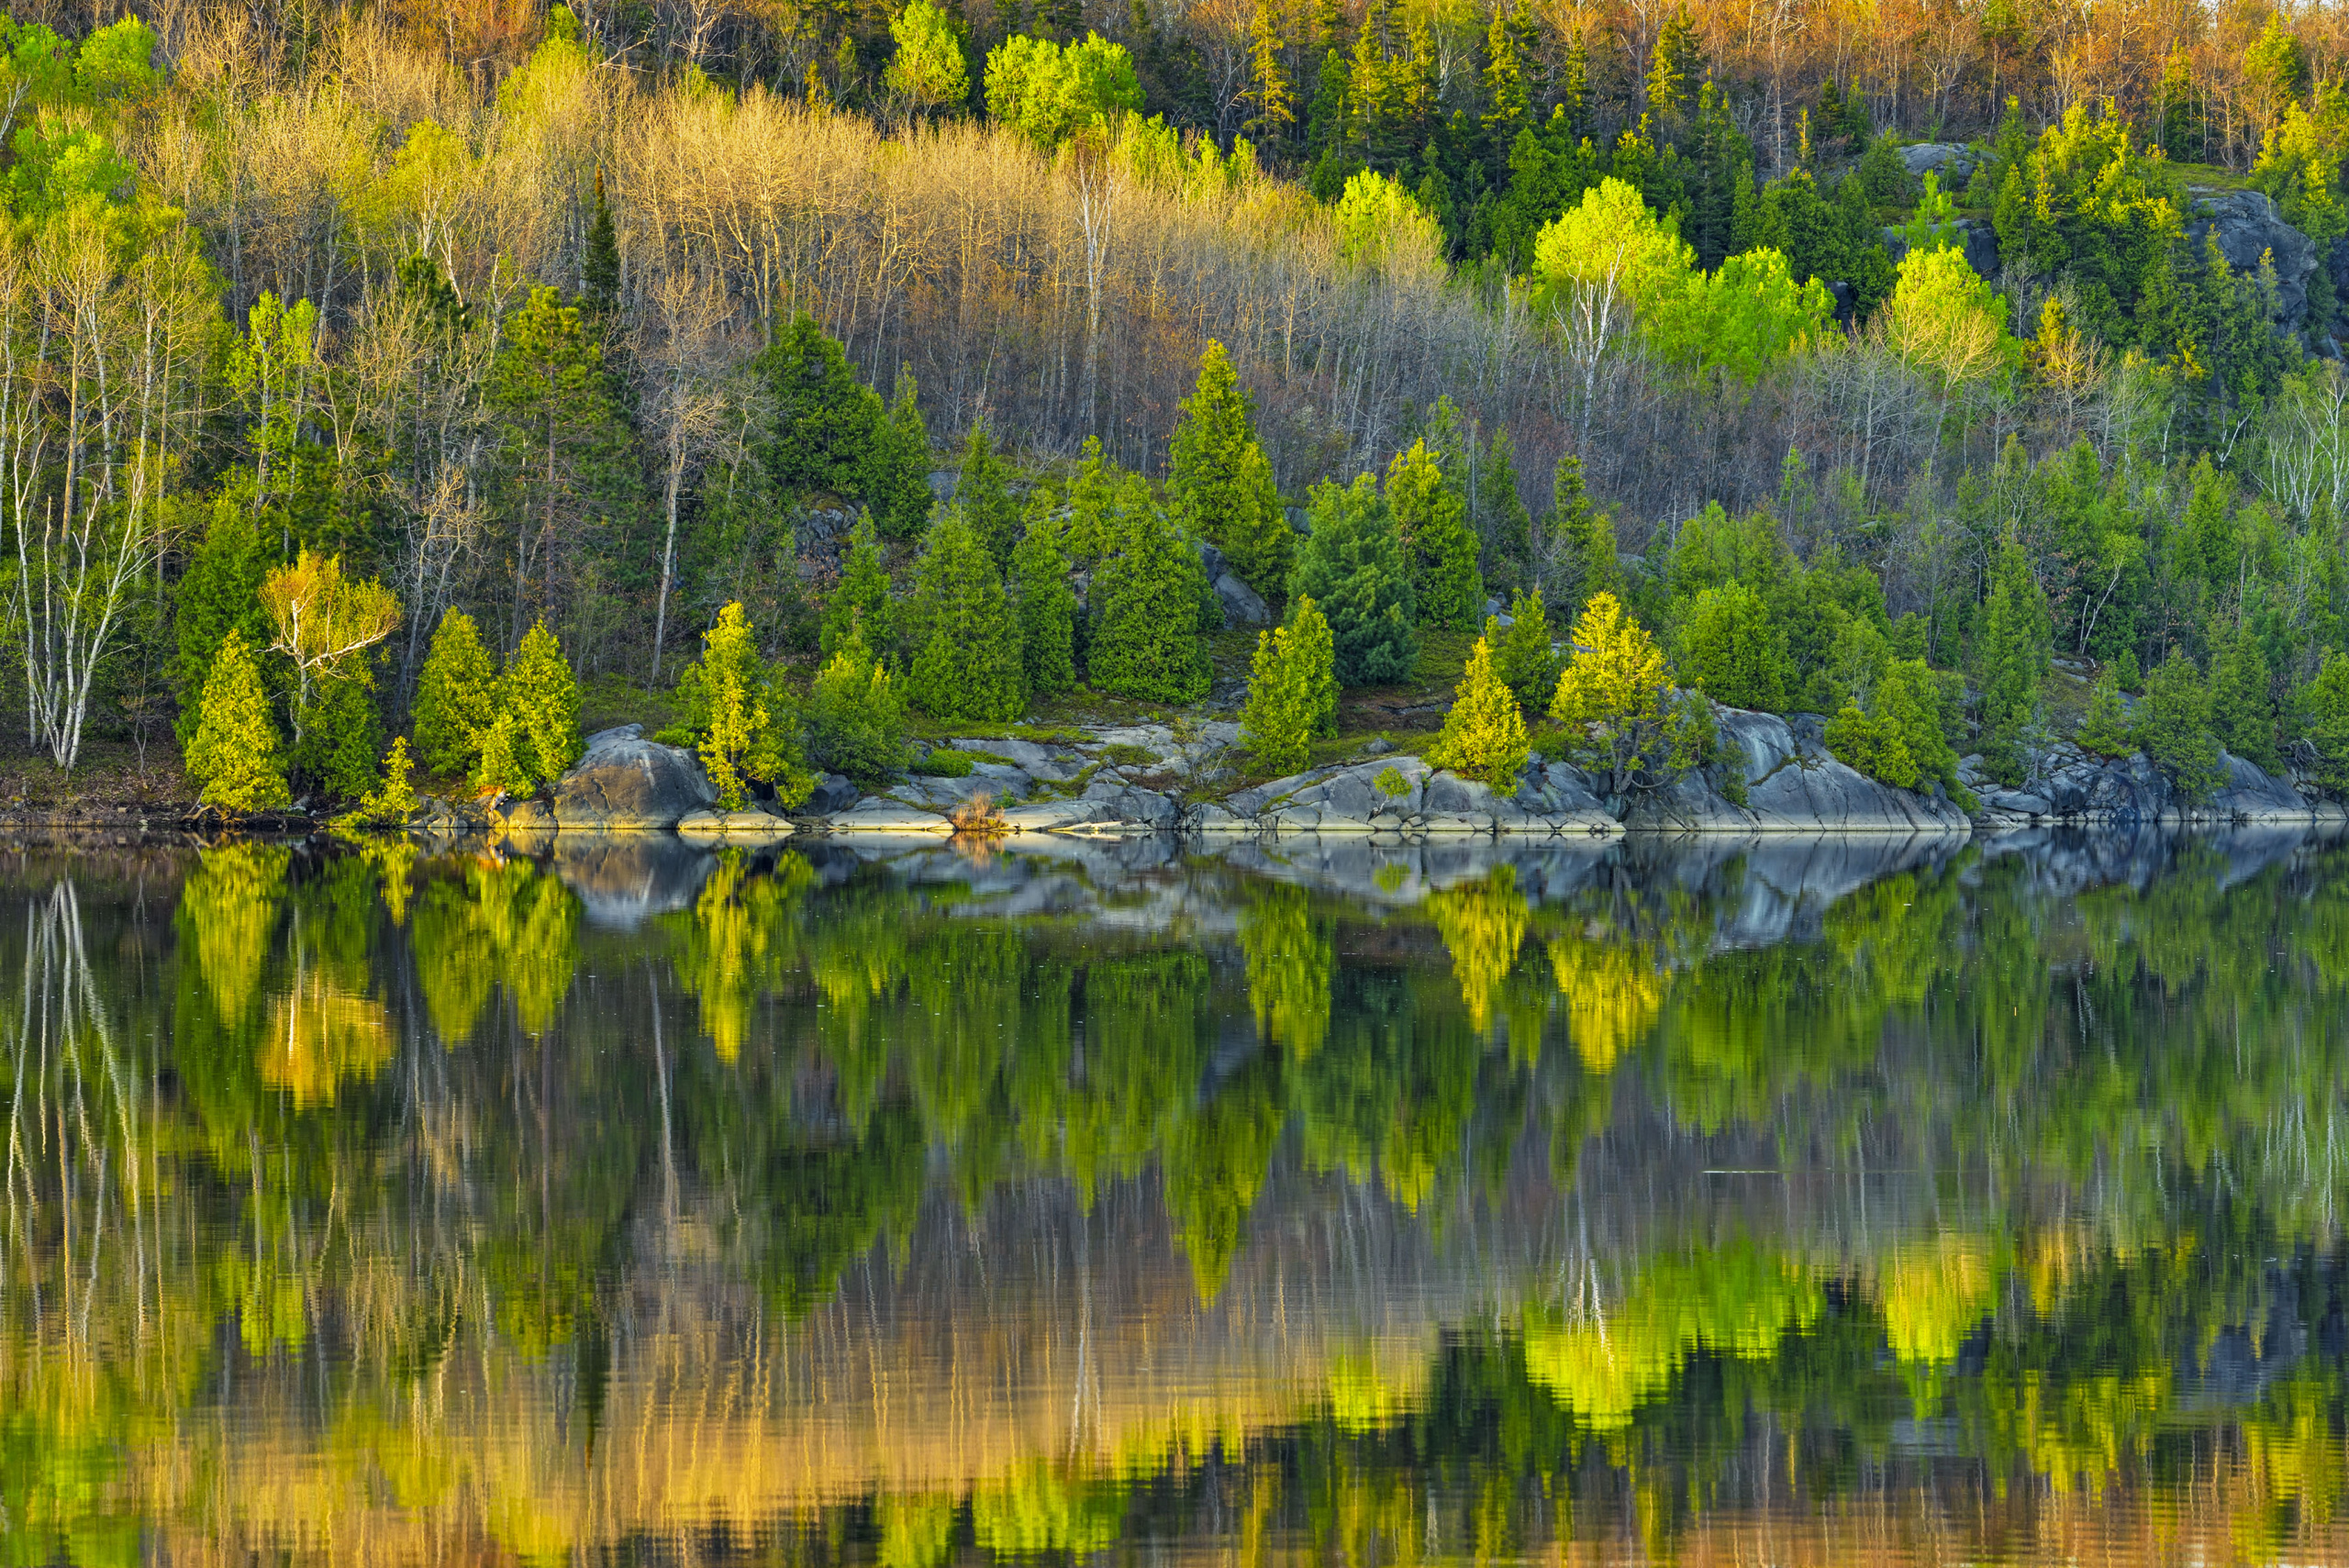     © Don Johnston, Spring Reflections in Simon Lake, 2019, Sudbury, Ontario

